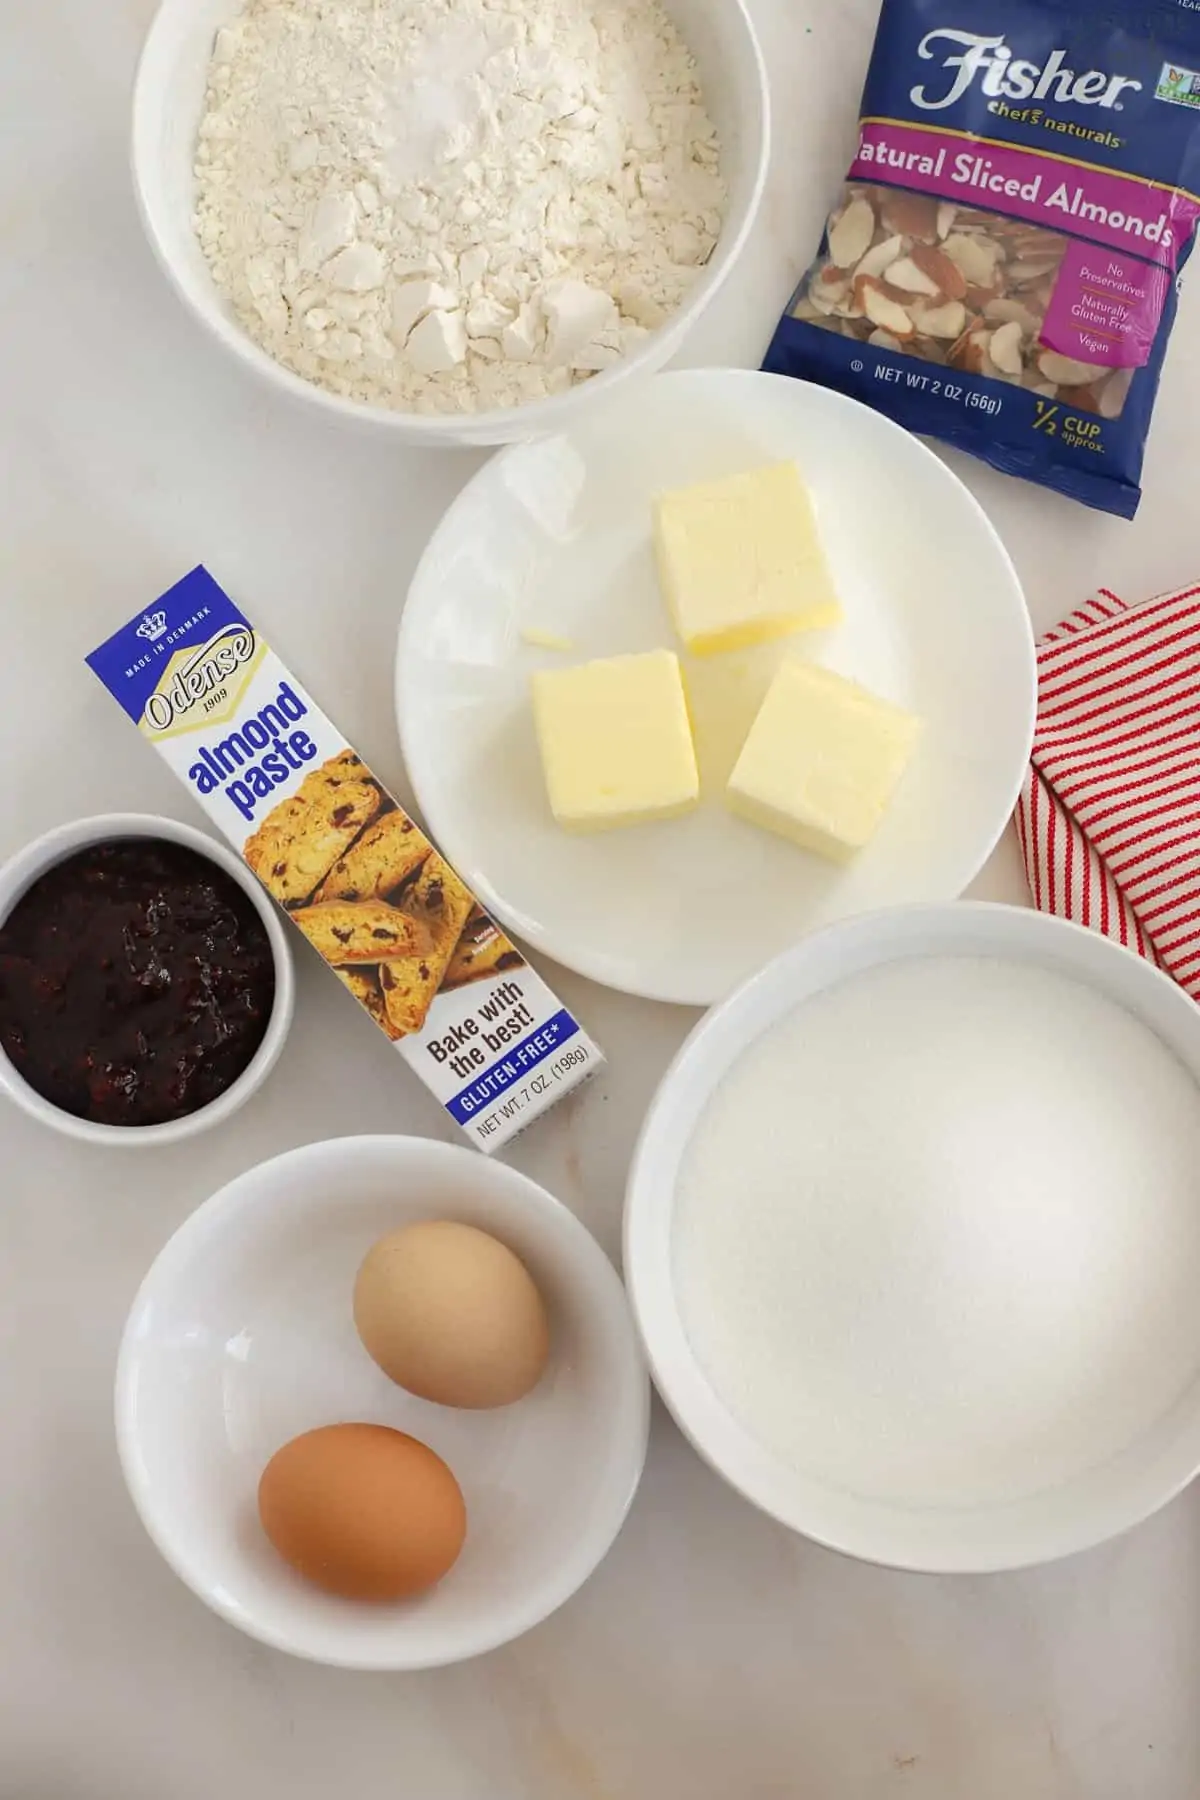 Ingredients for almond bars: eggs, almond paste, sugar, flour, jam, almonds.